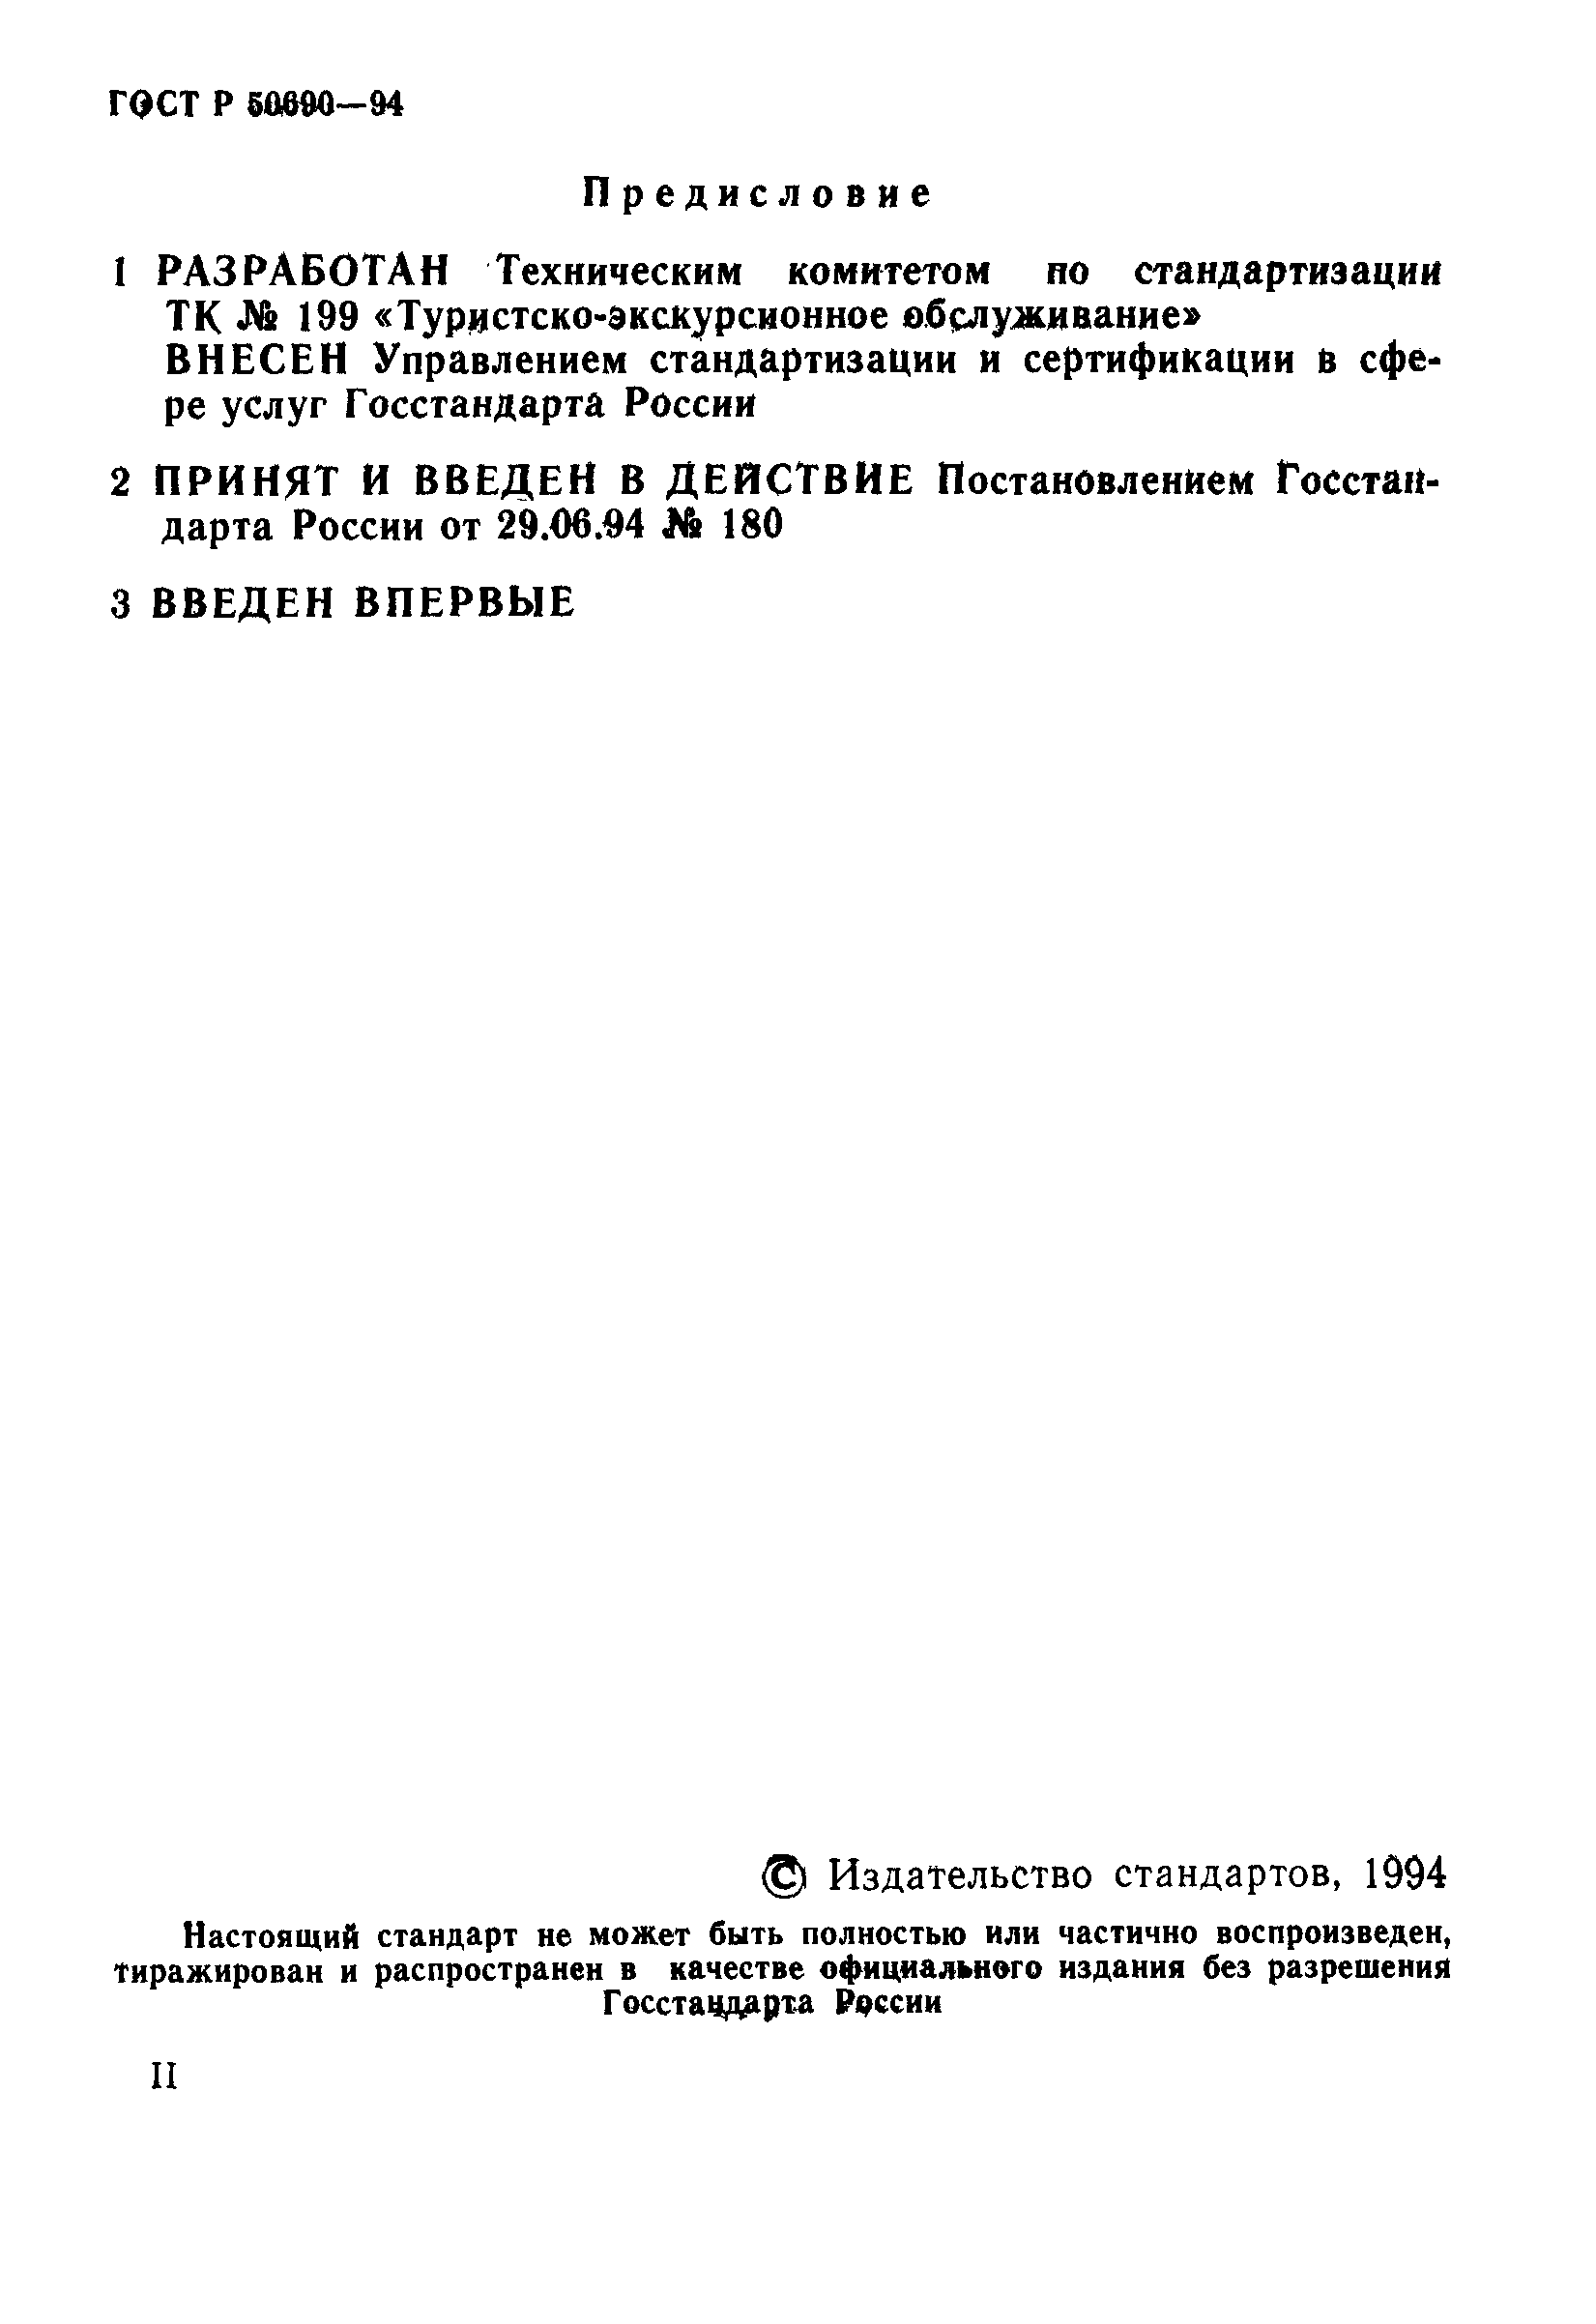 ГОСТ Р 50690-94